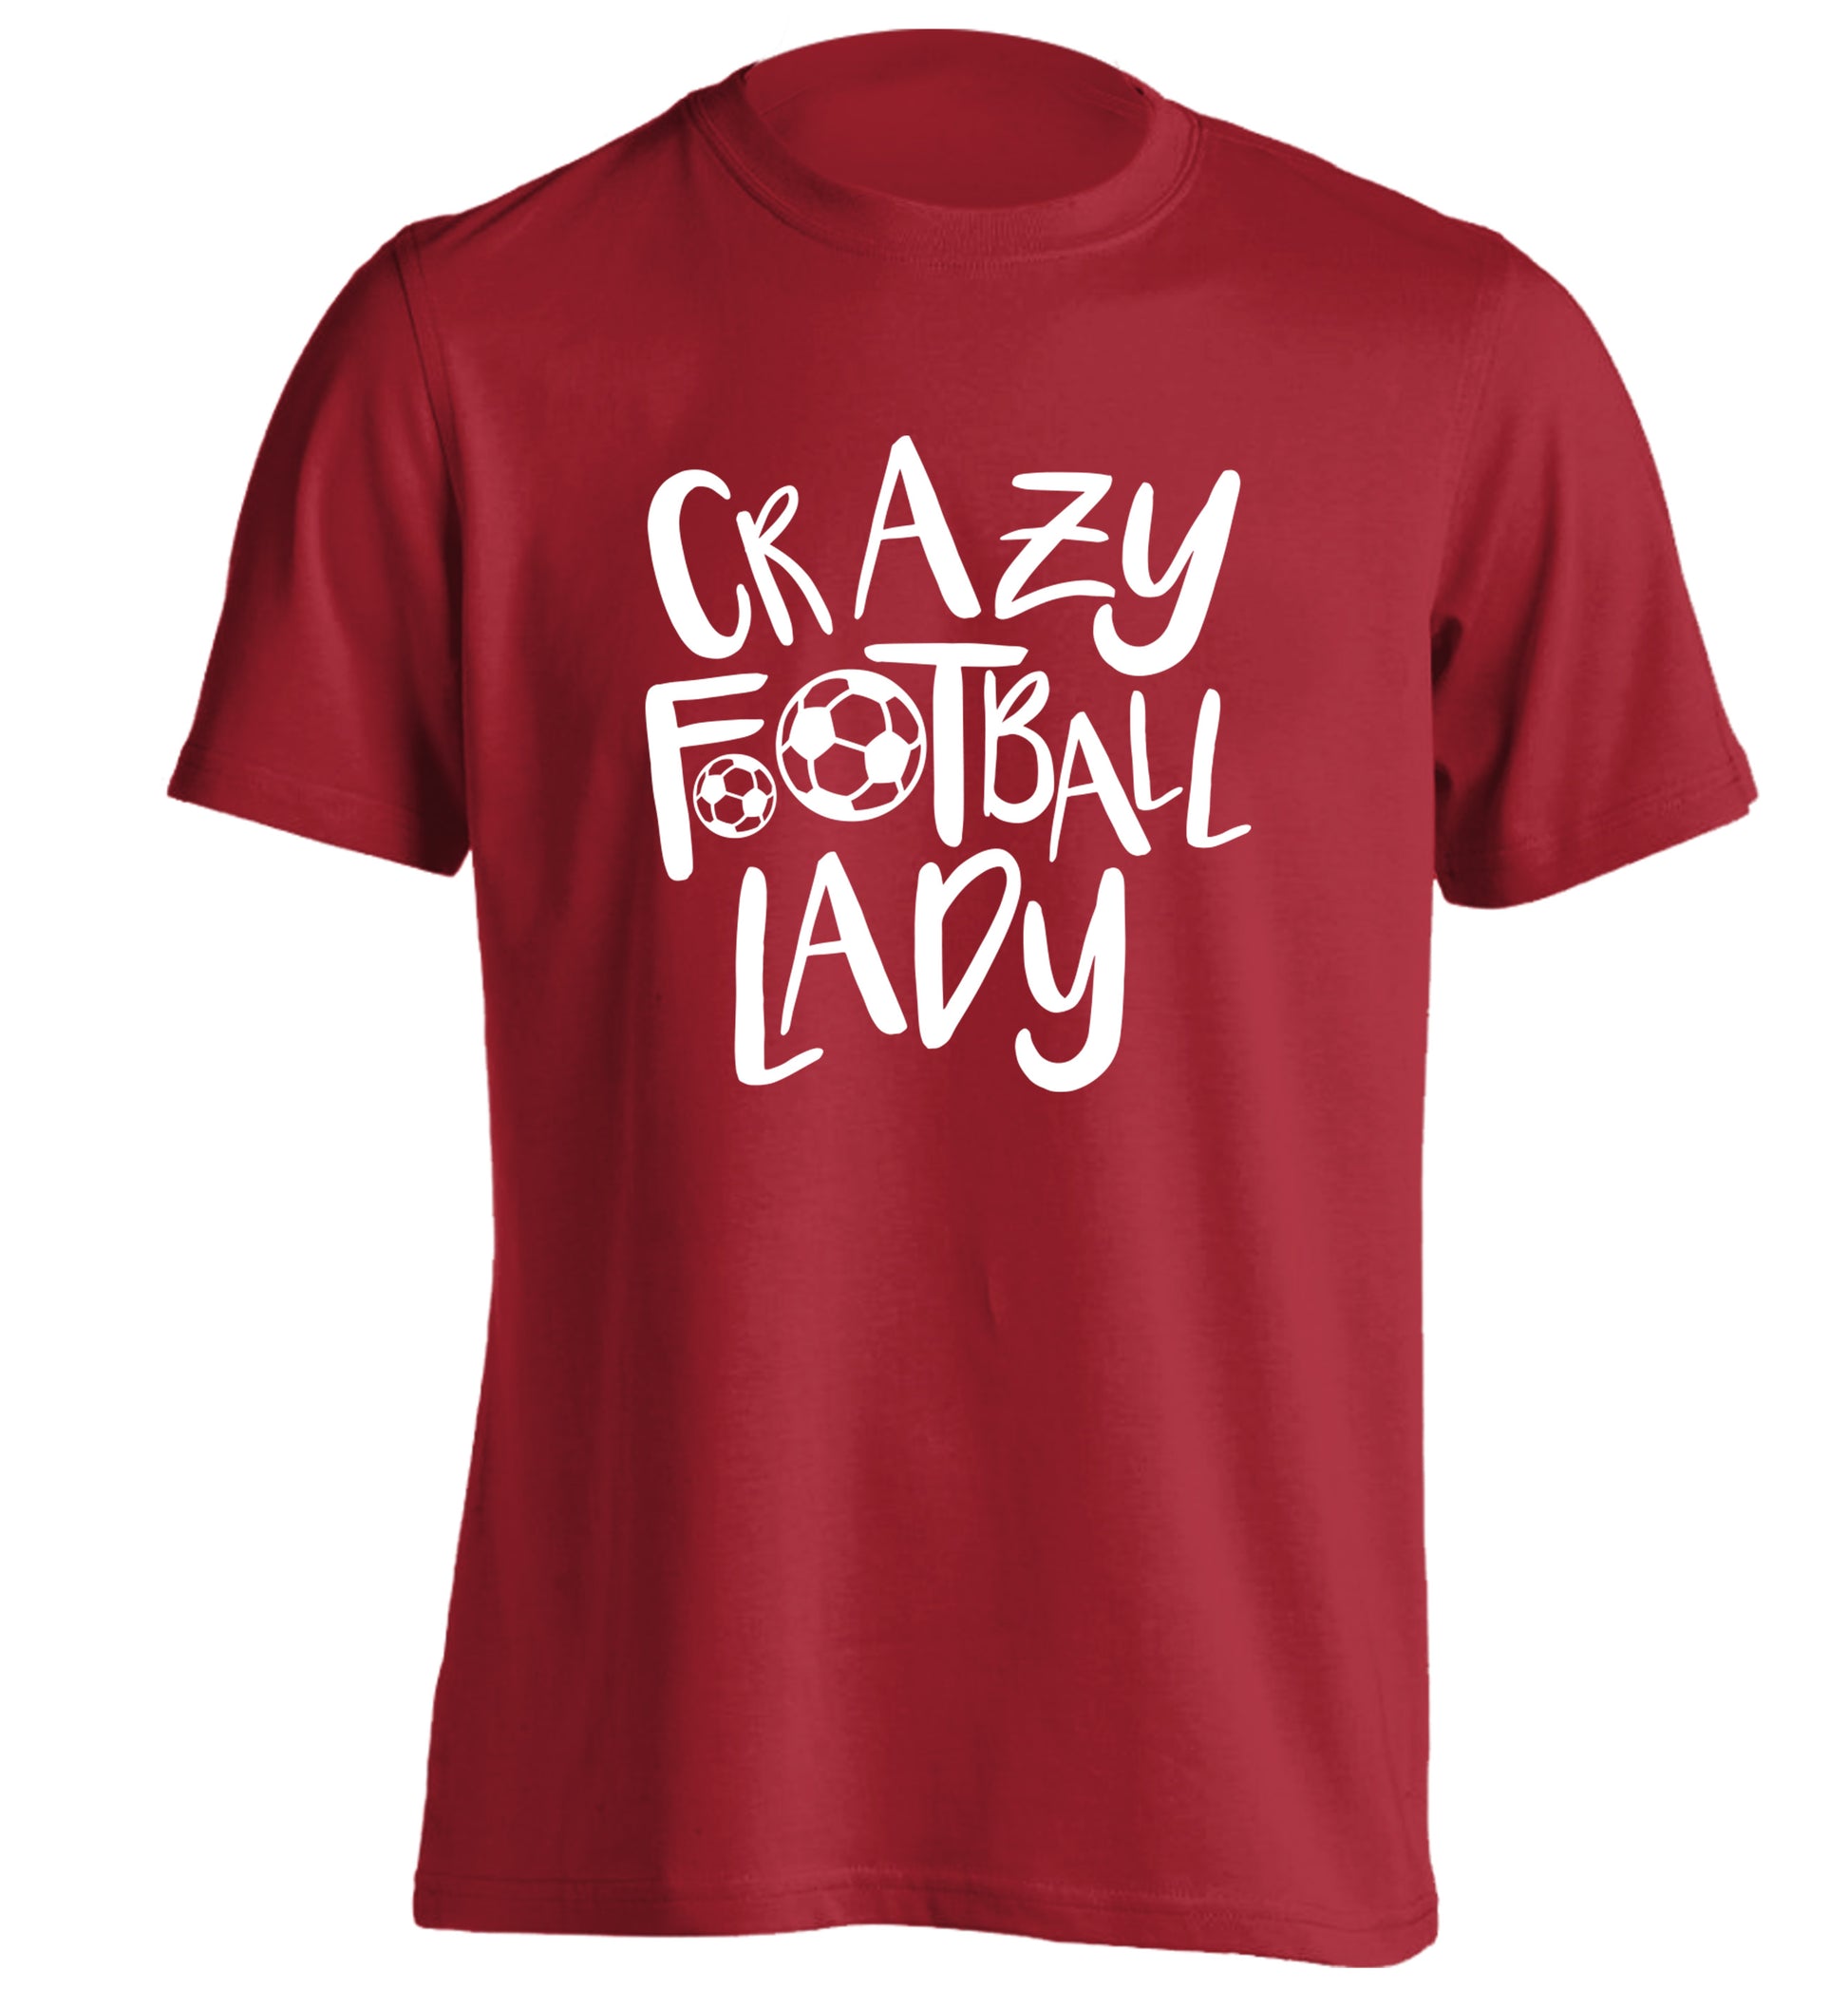 Crazy football lady adults unisexred Tshirt 2XL